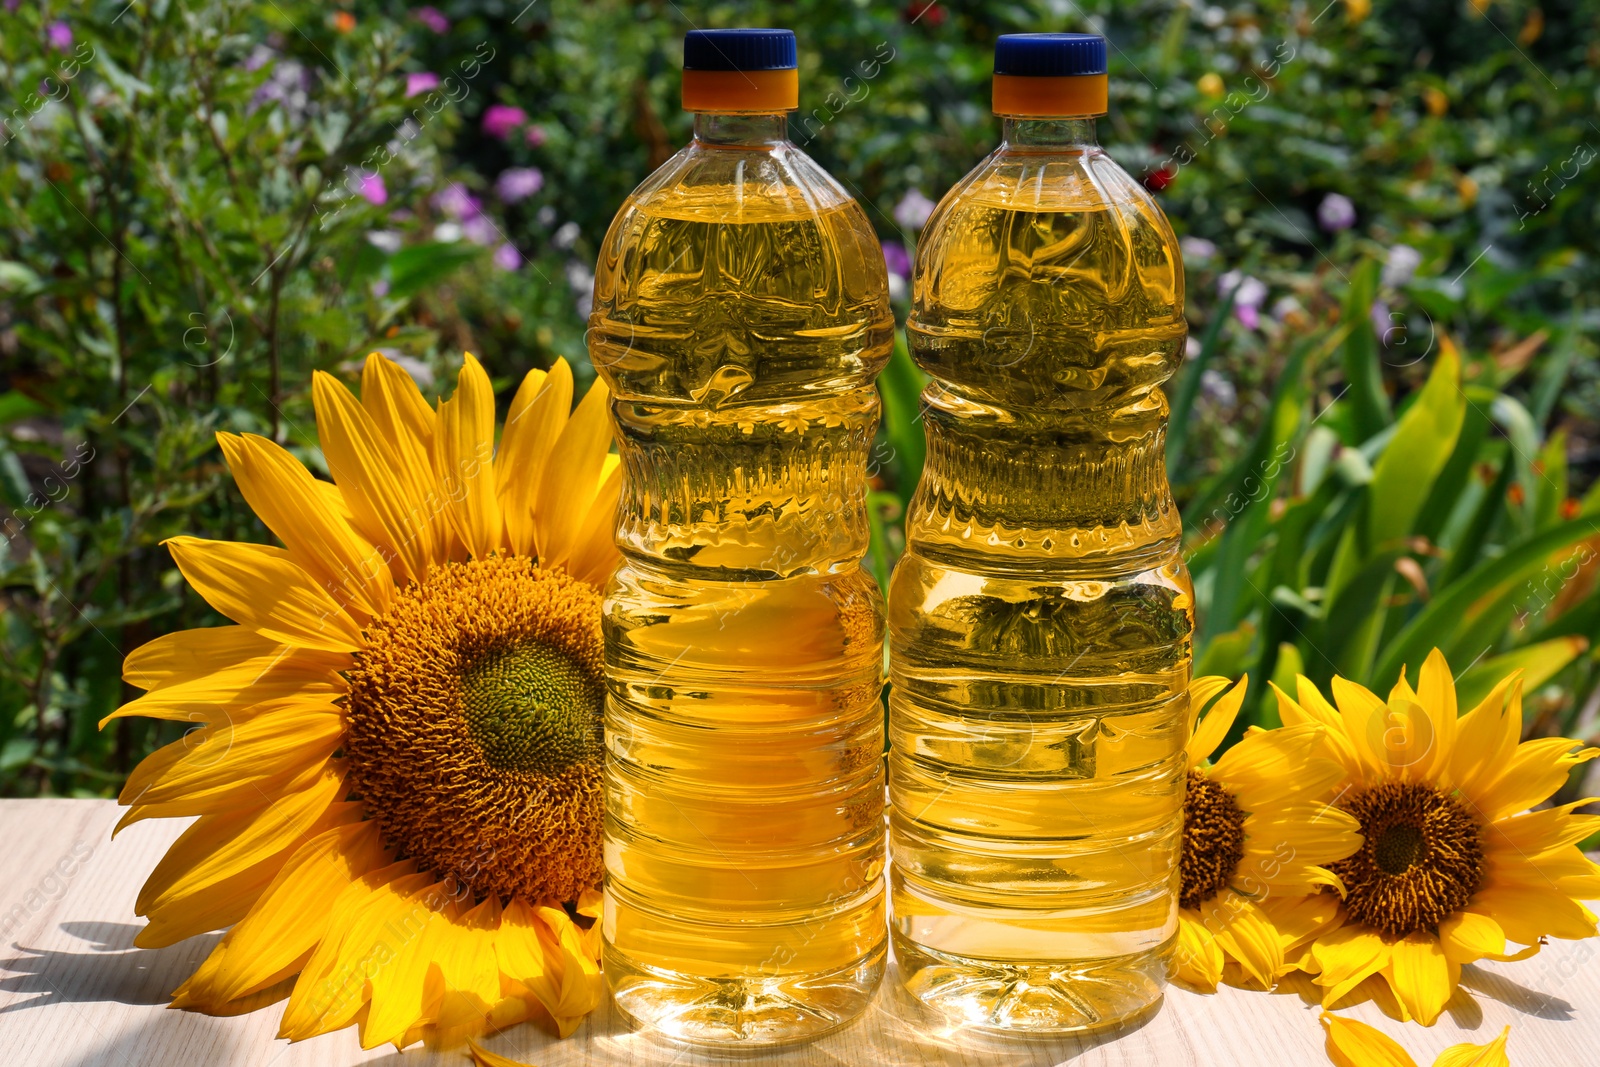 Photo of Bottles of sunflower oil on wooden table outdoors